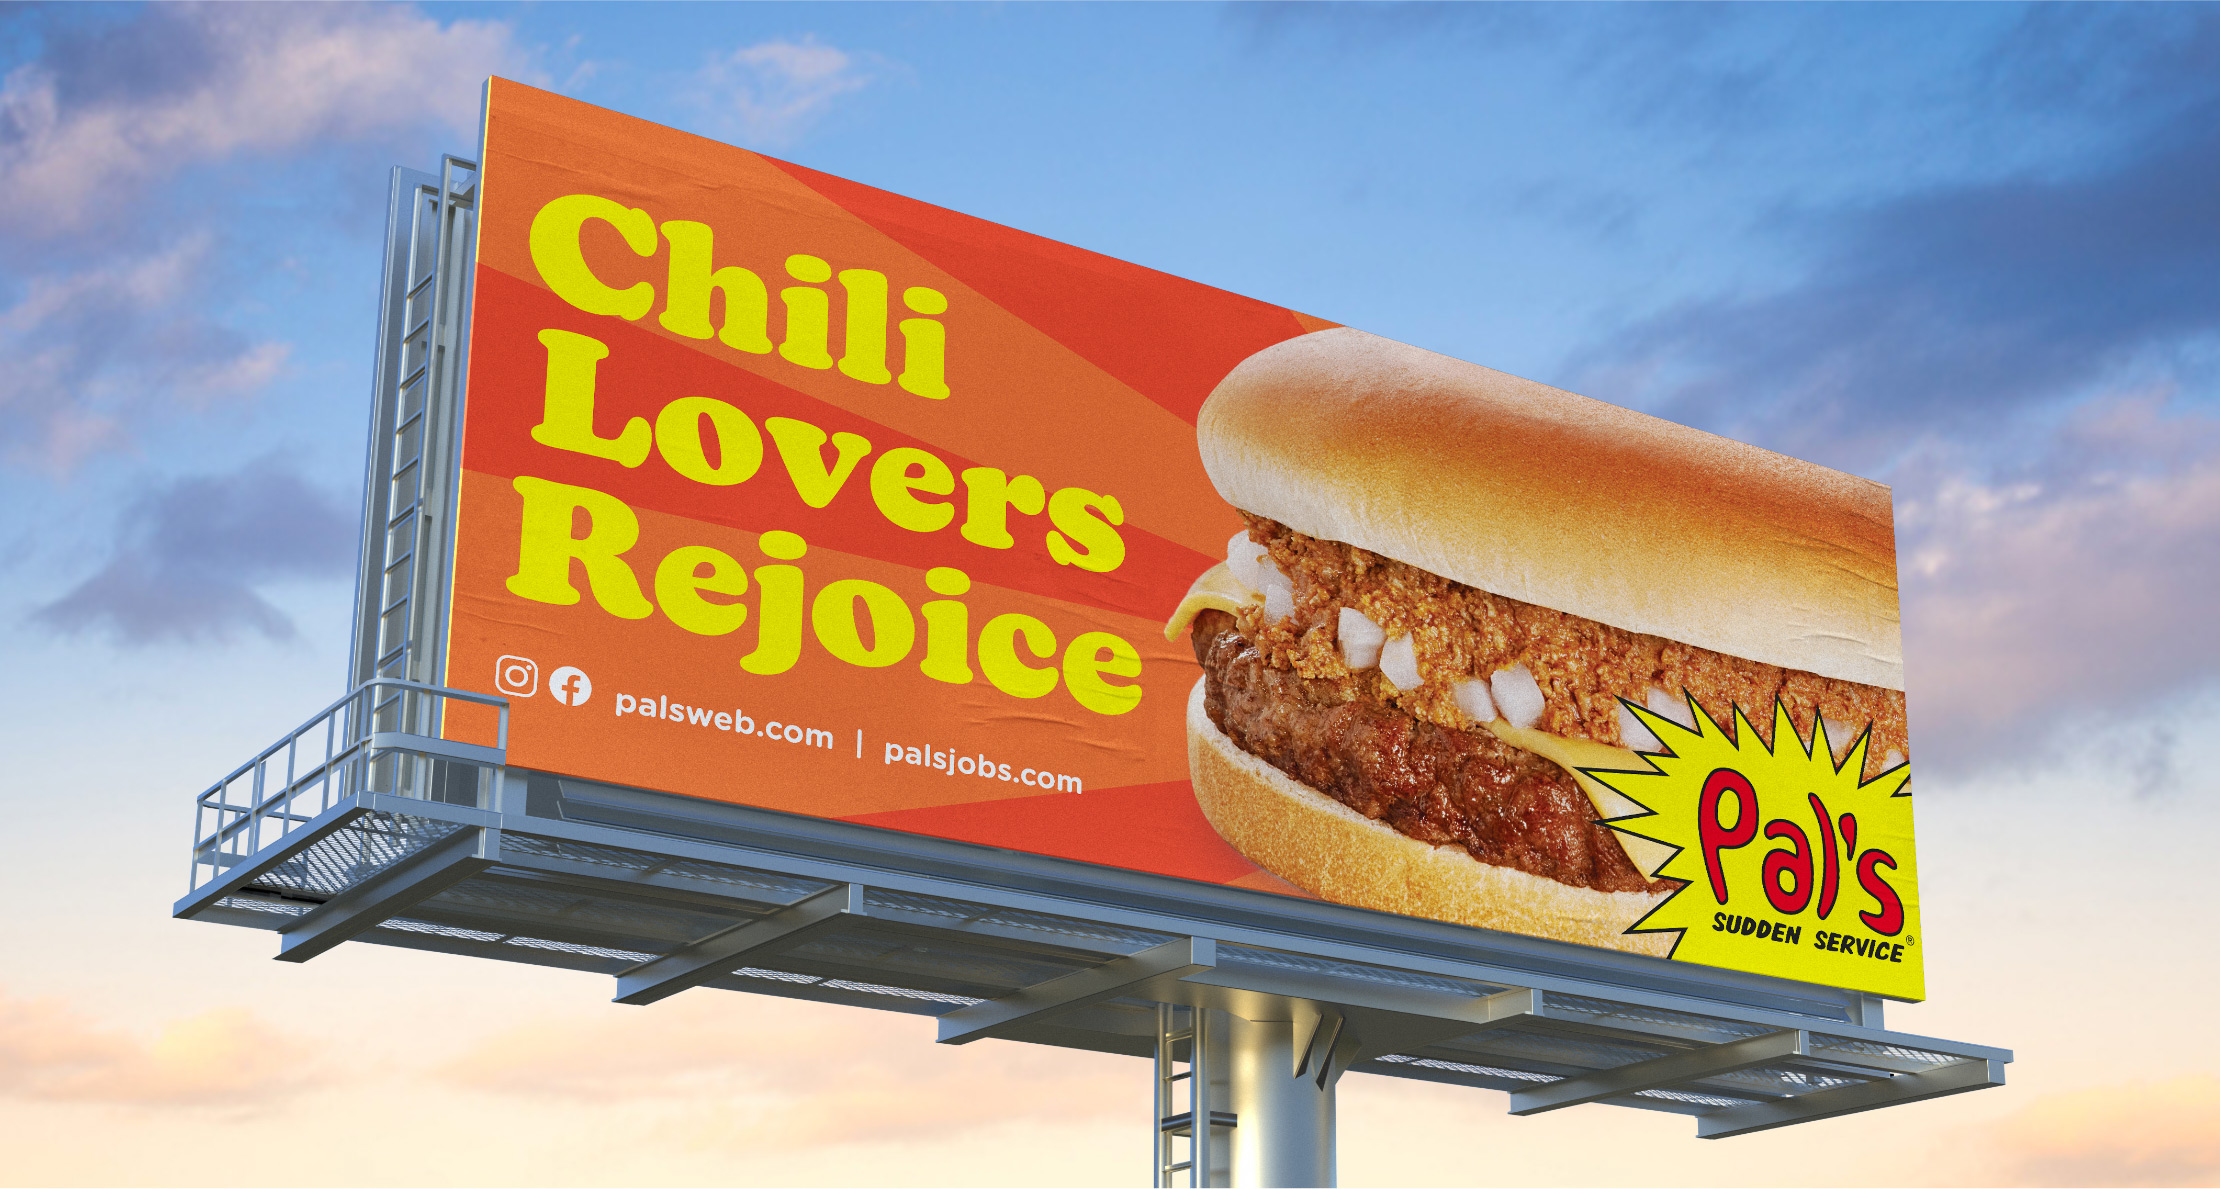 Creative Energy - Pal's Sudden Service - Chili Burger Billboard